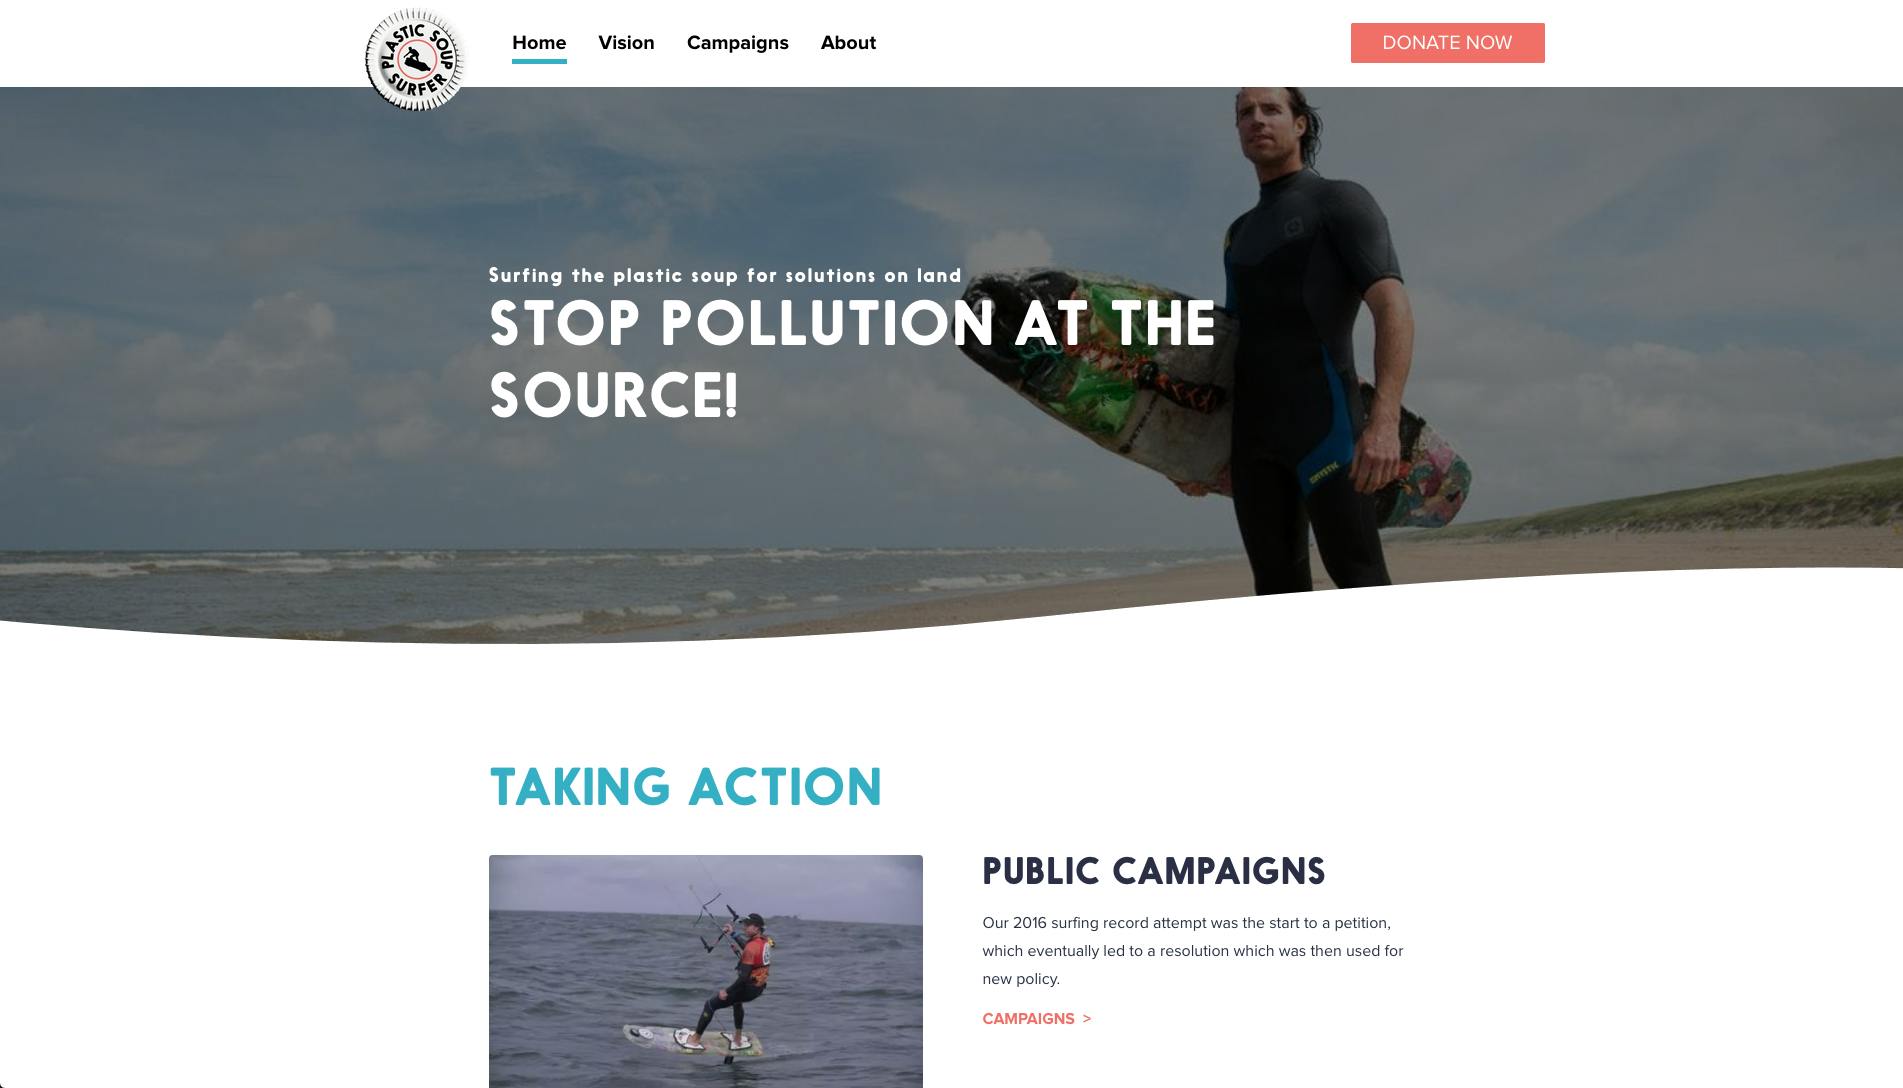 Campagnewebsite voor the Plastic Soup Surfer